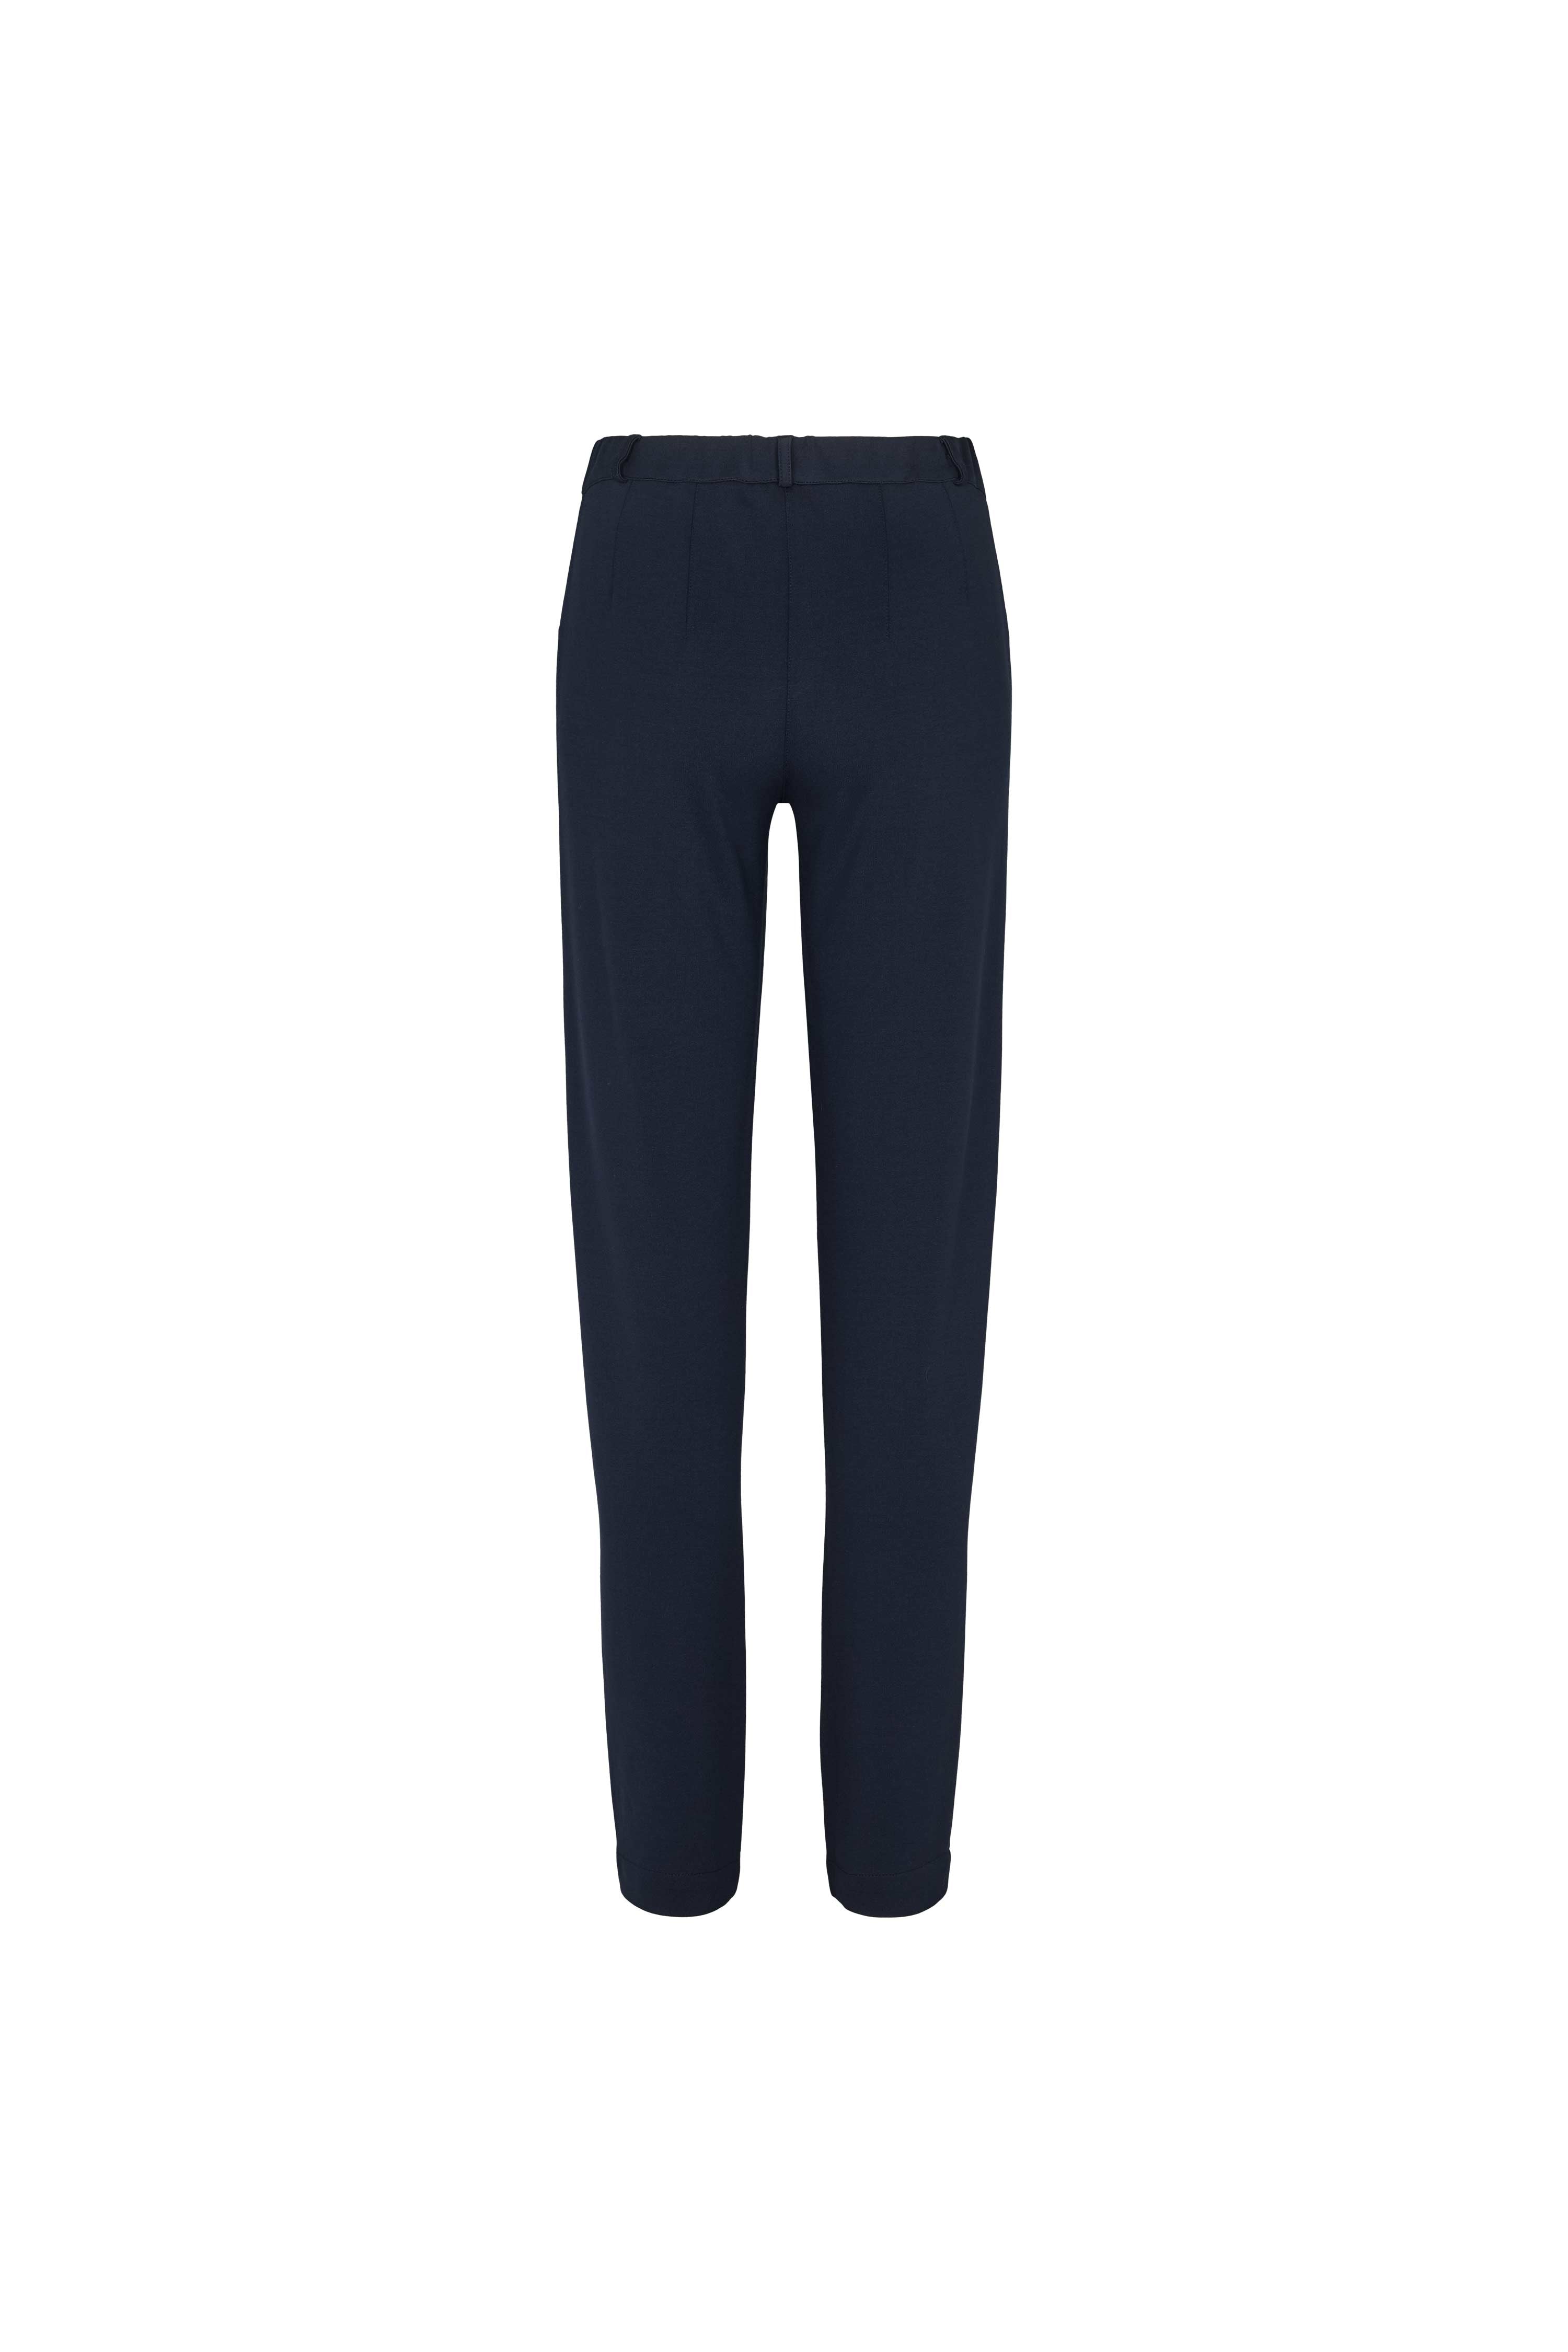 LAURIE  Kelly Regular Jersey - Medium Length Trousers REGULAR 99143 Black brushed